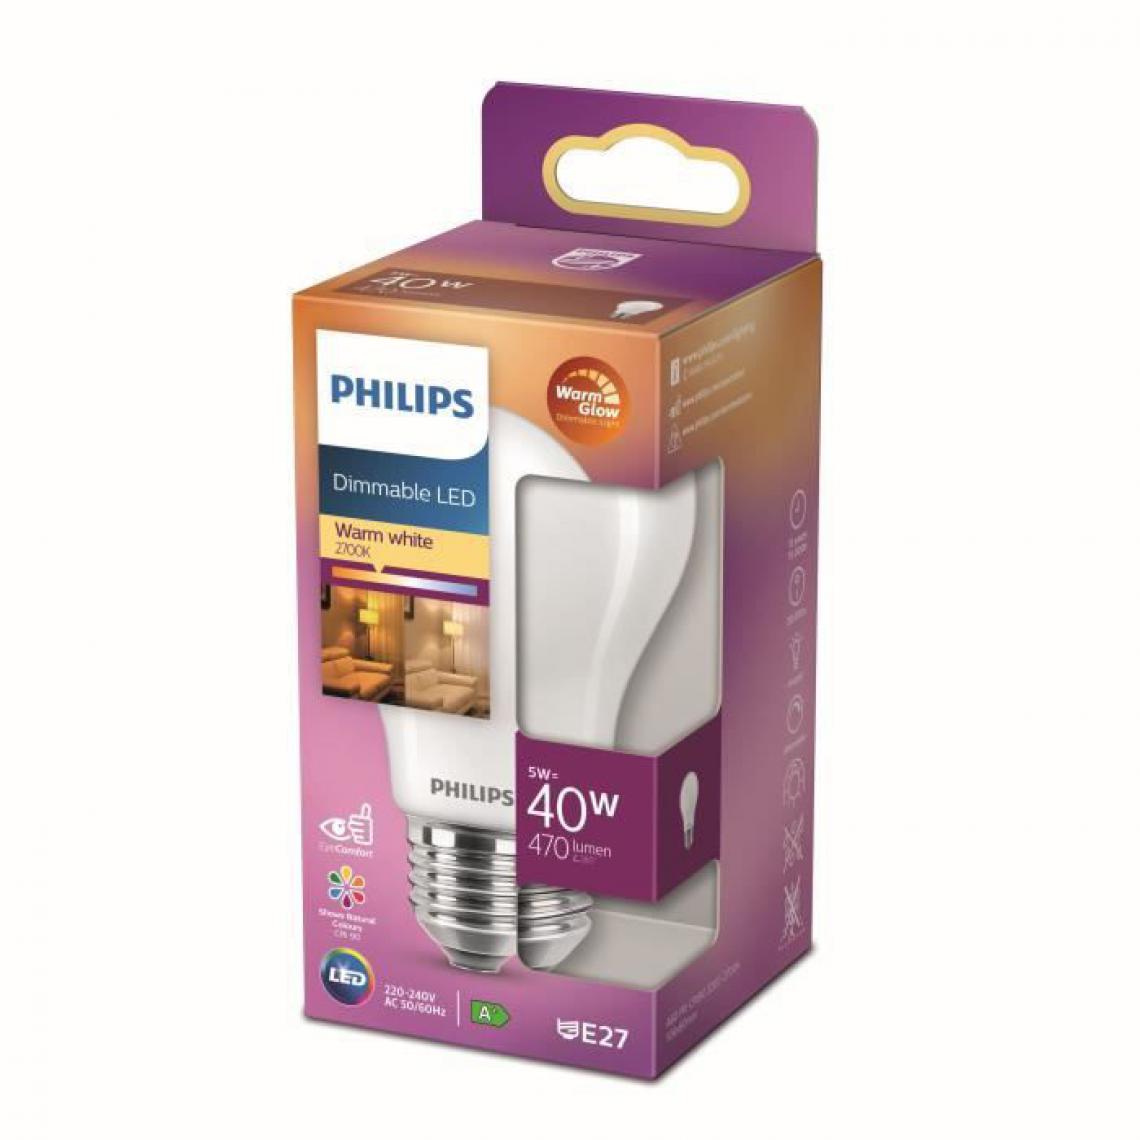 Philips - Philips ampoule LED Equivalent 40W E27, Blanc chaud, Dimmable, verre - Ampoules LED